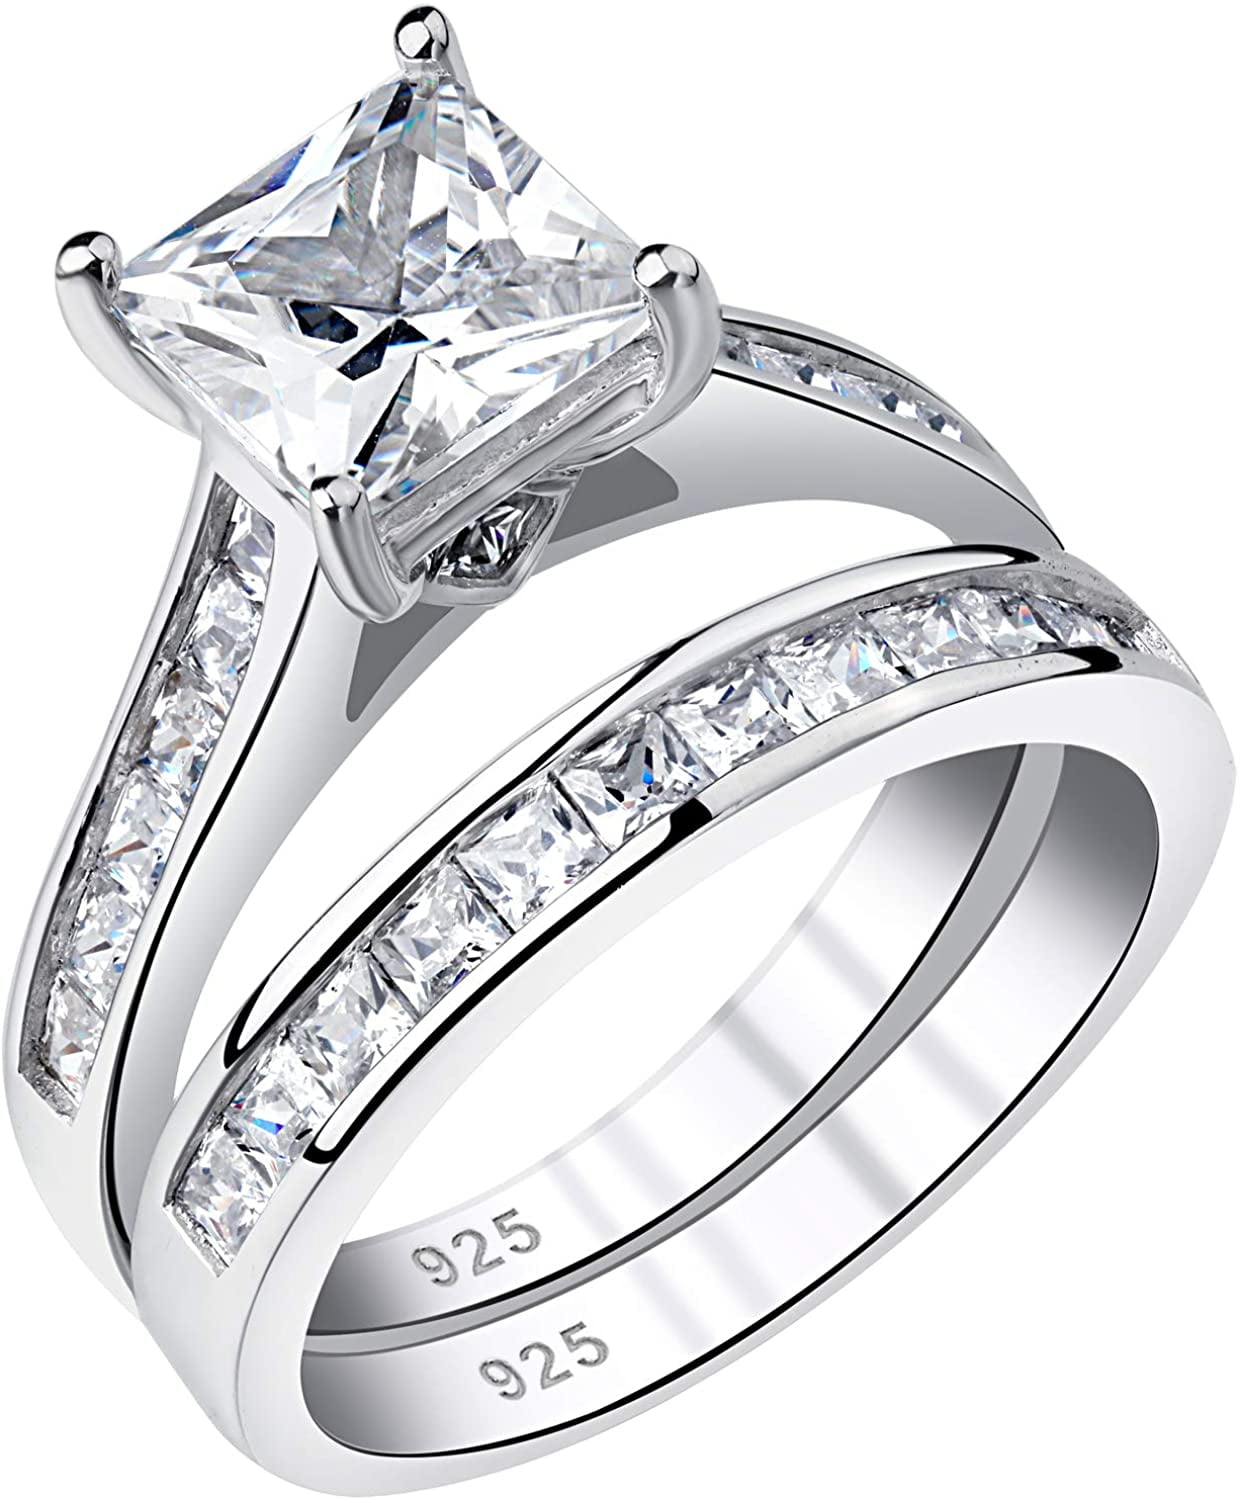 Newshe Engagement Wedding Ring Set 1ct Halo Princess Cz 925 Sterling Silver 5-10 